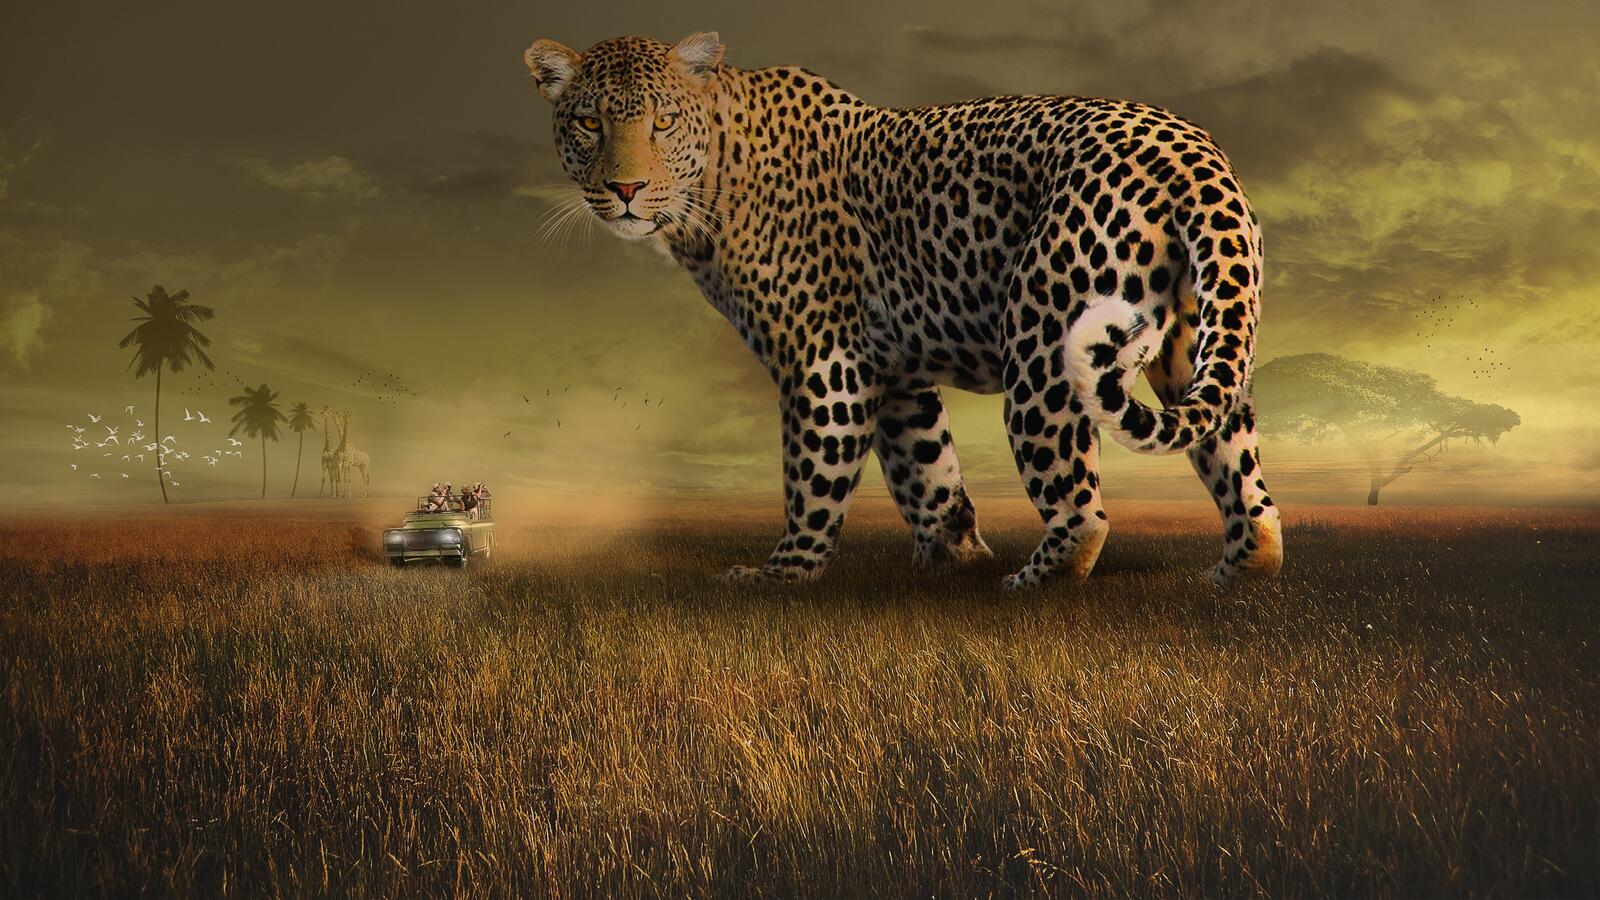 Wallpapers wildlife leopard spots on the desktop